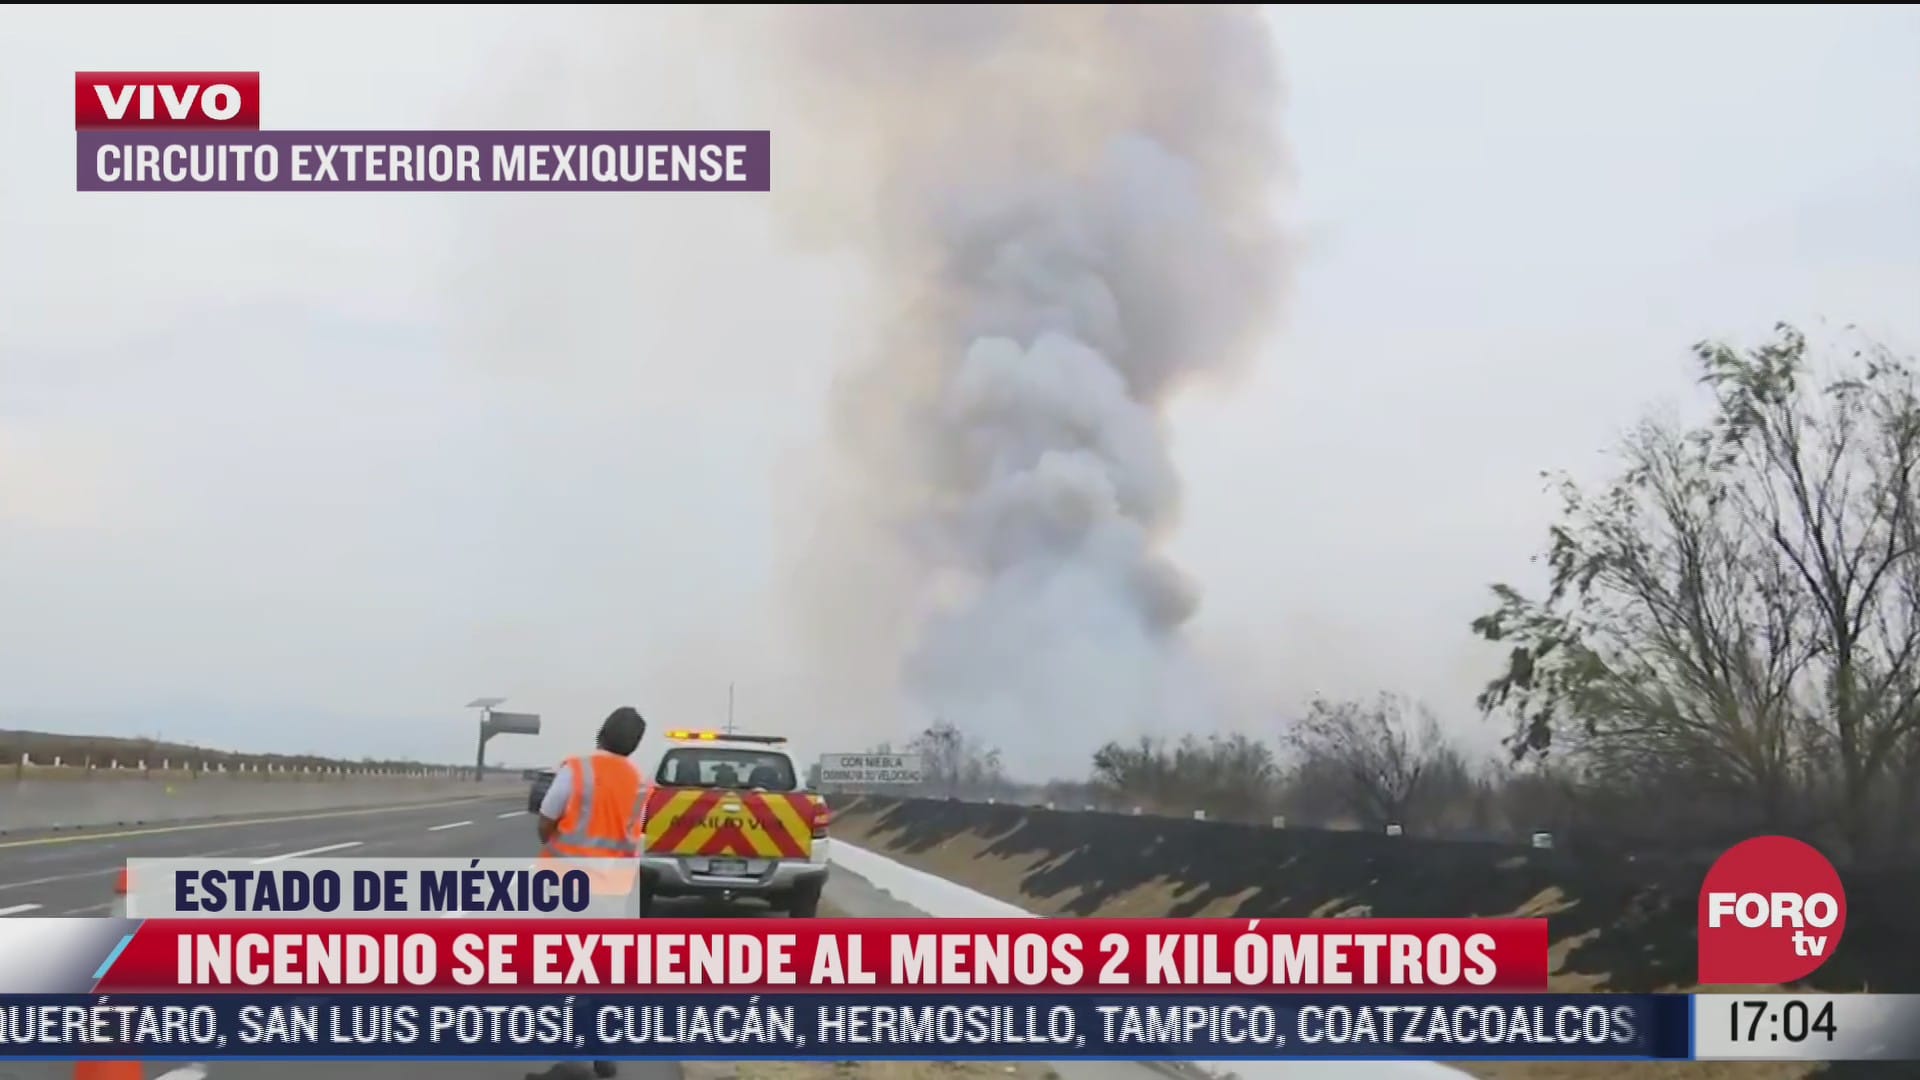 reportan incendio en el circuito exterior mexiquense